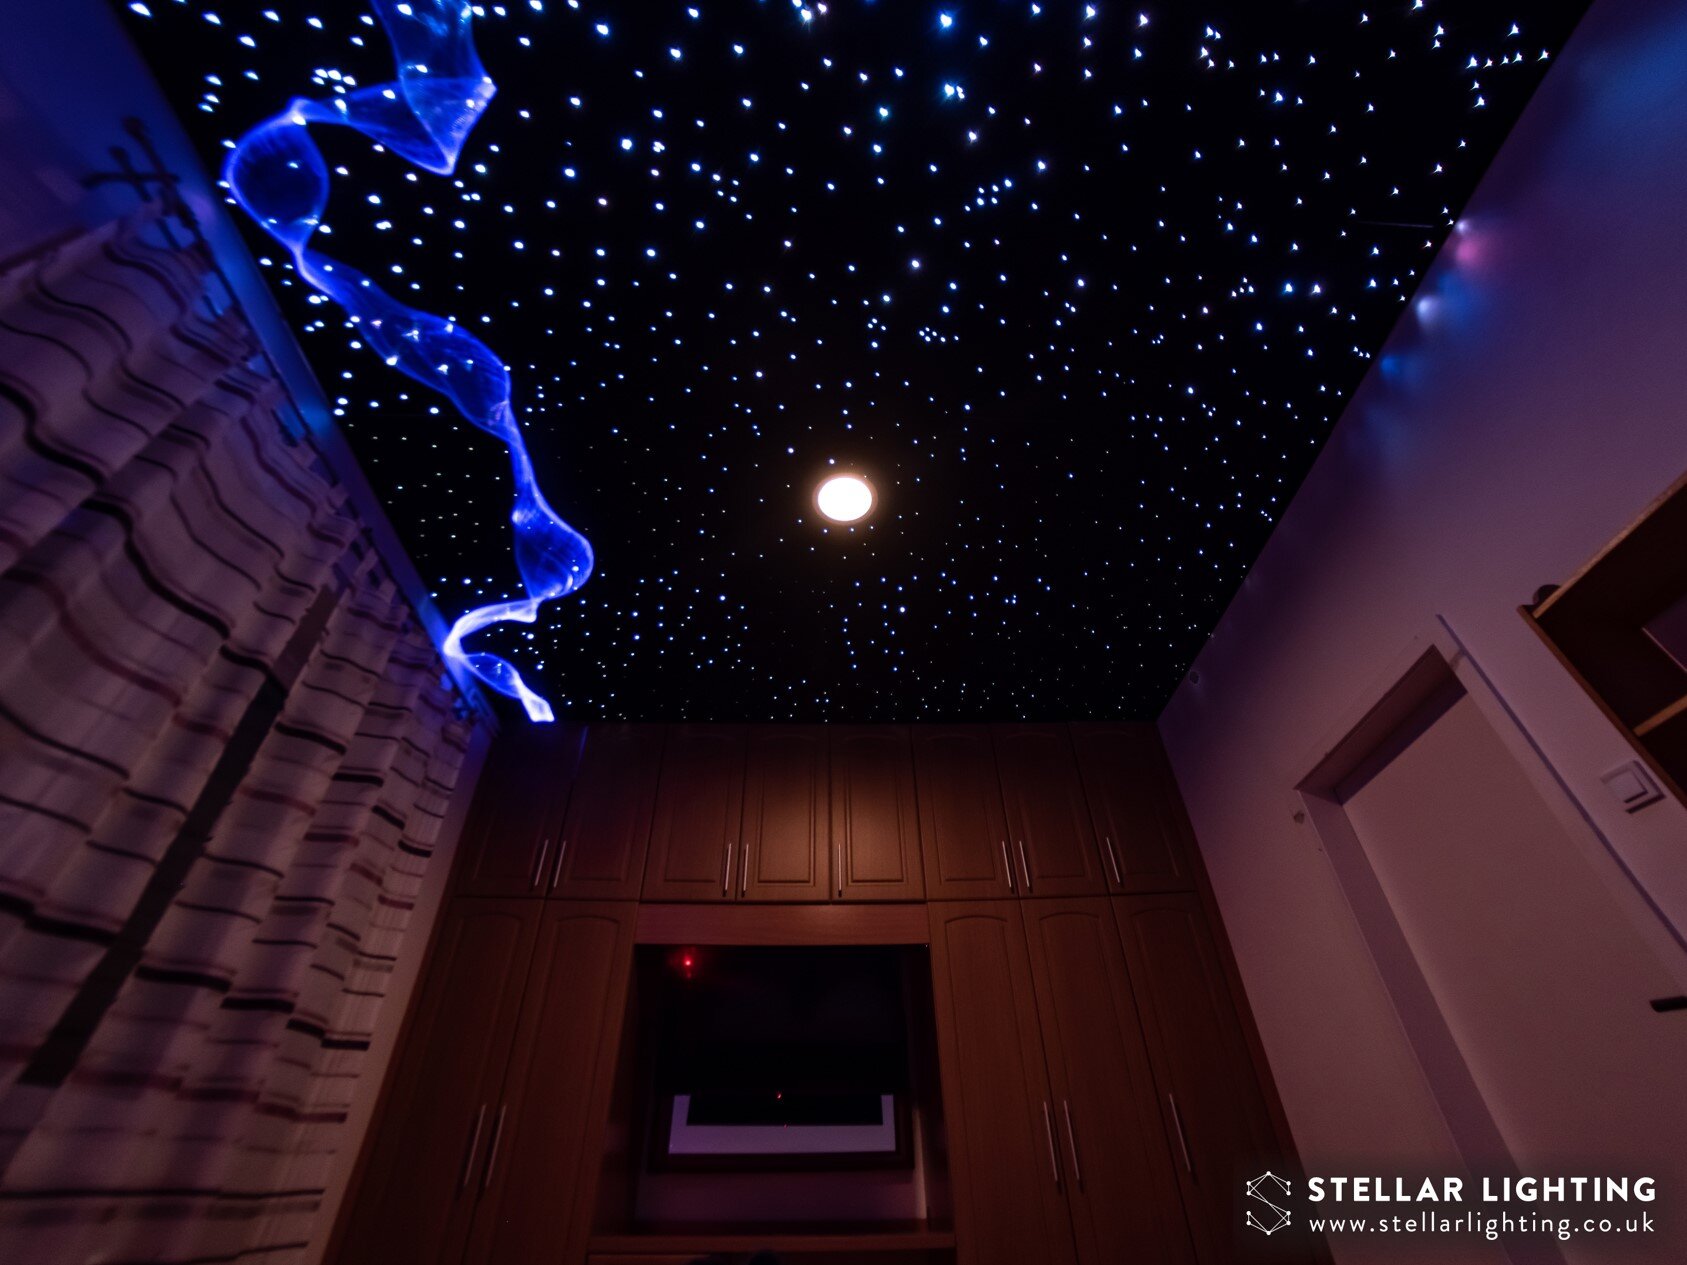 How to make a star ceiling - Stellar Lighting — Stellar Lighting